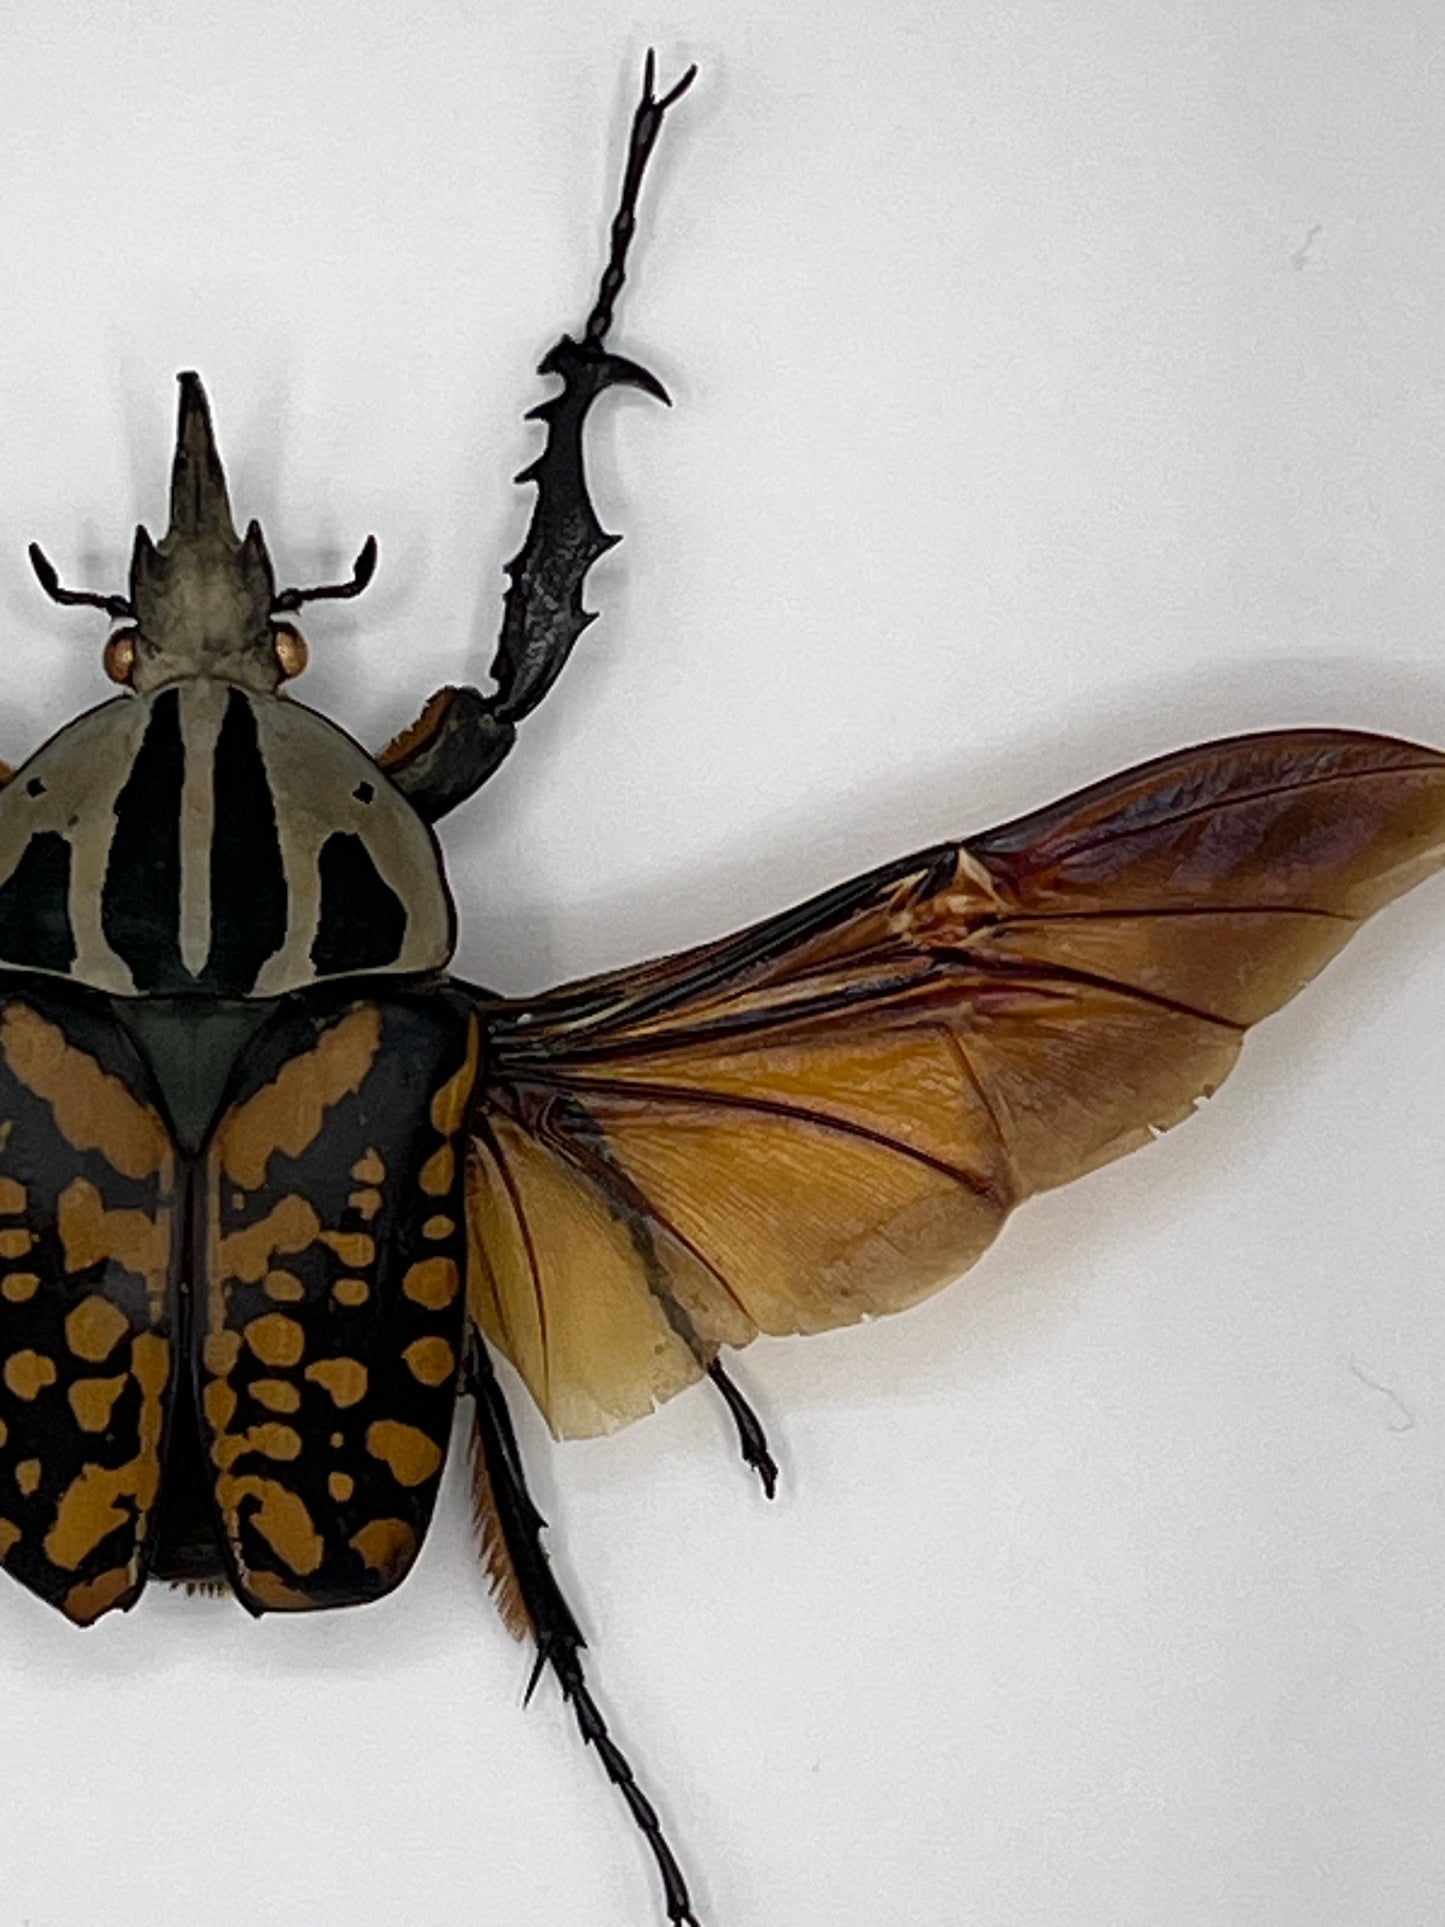 Beetle - Mecynorhina oberthuri decorata